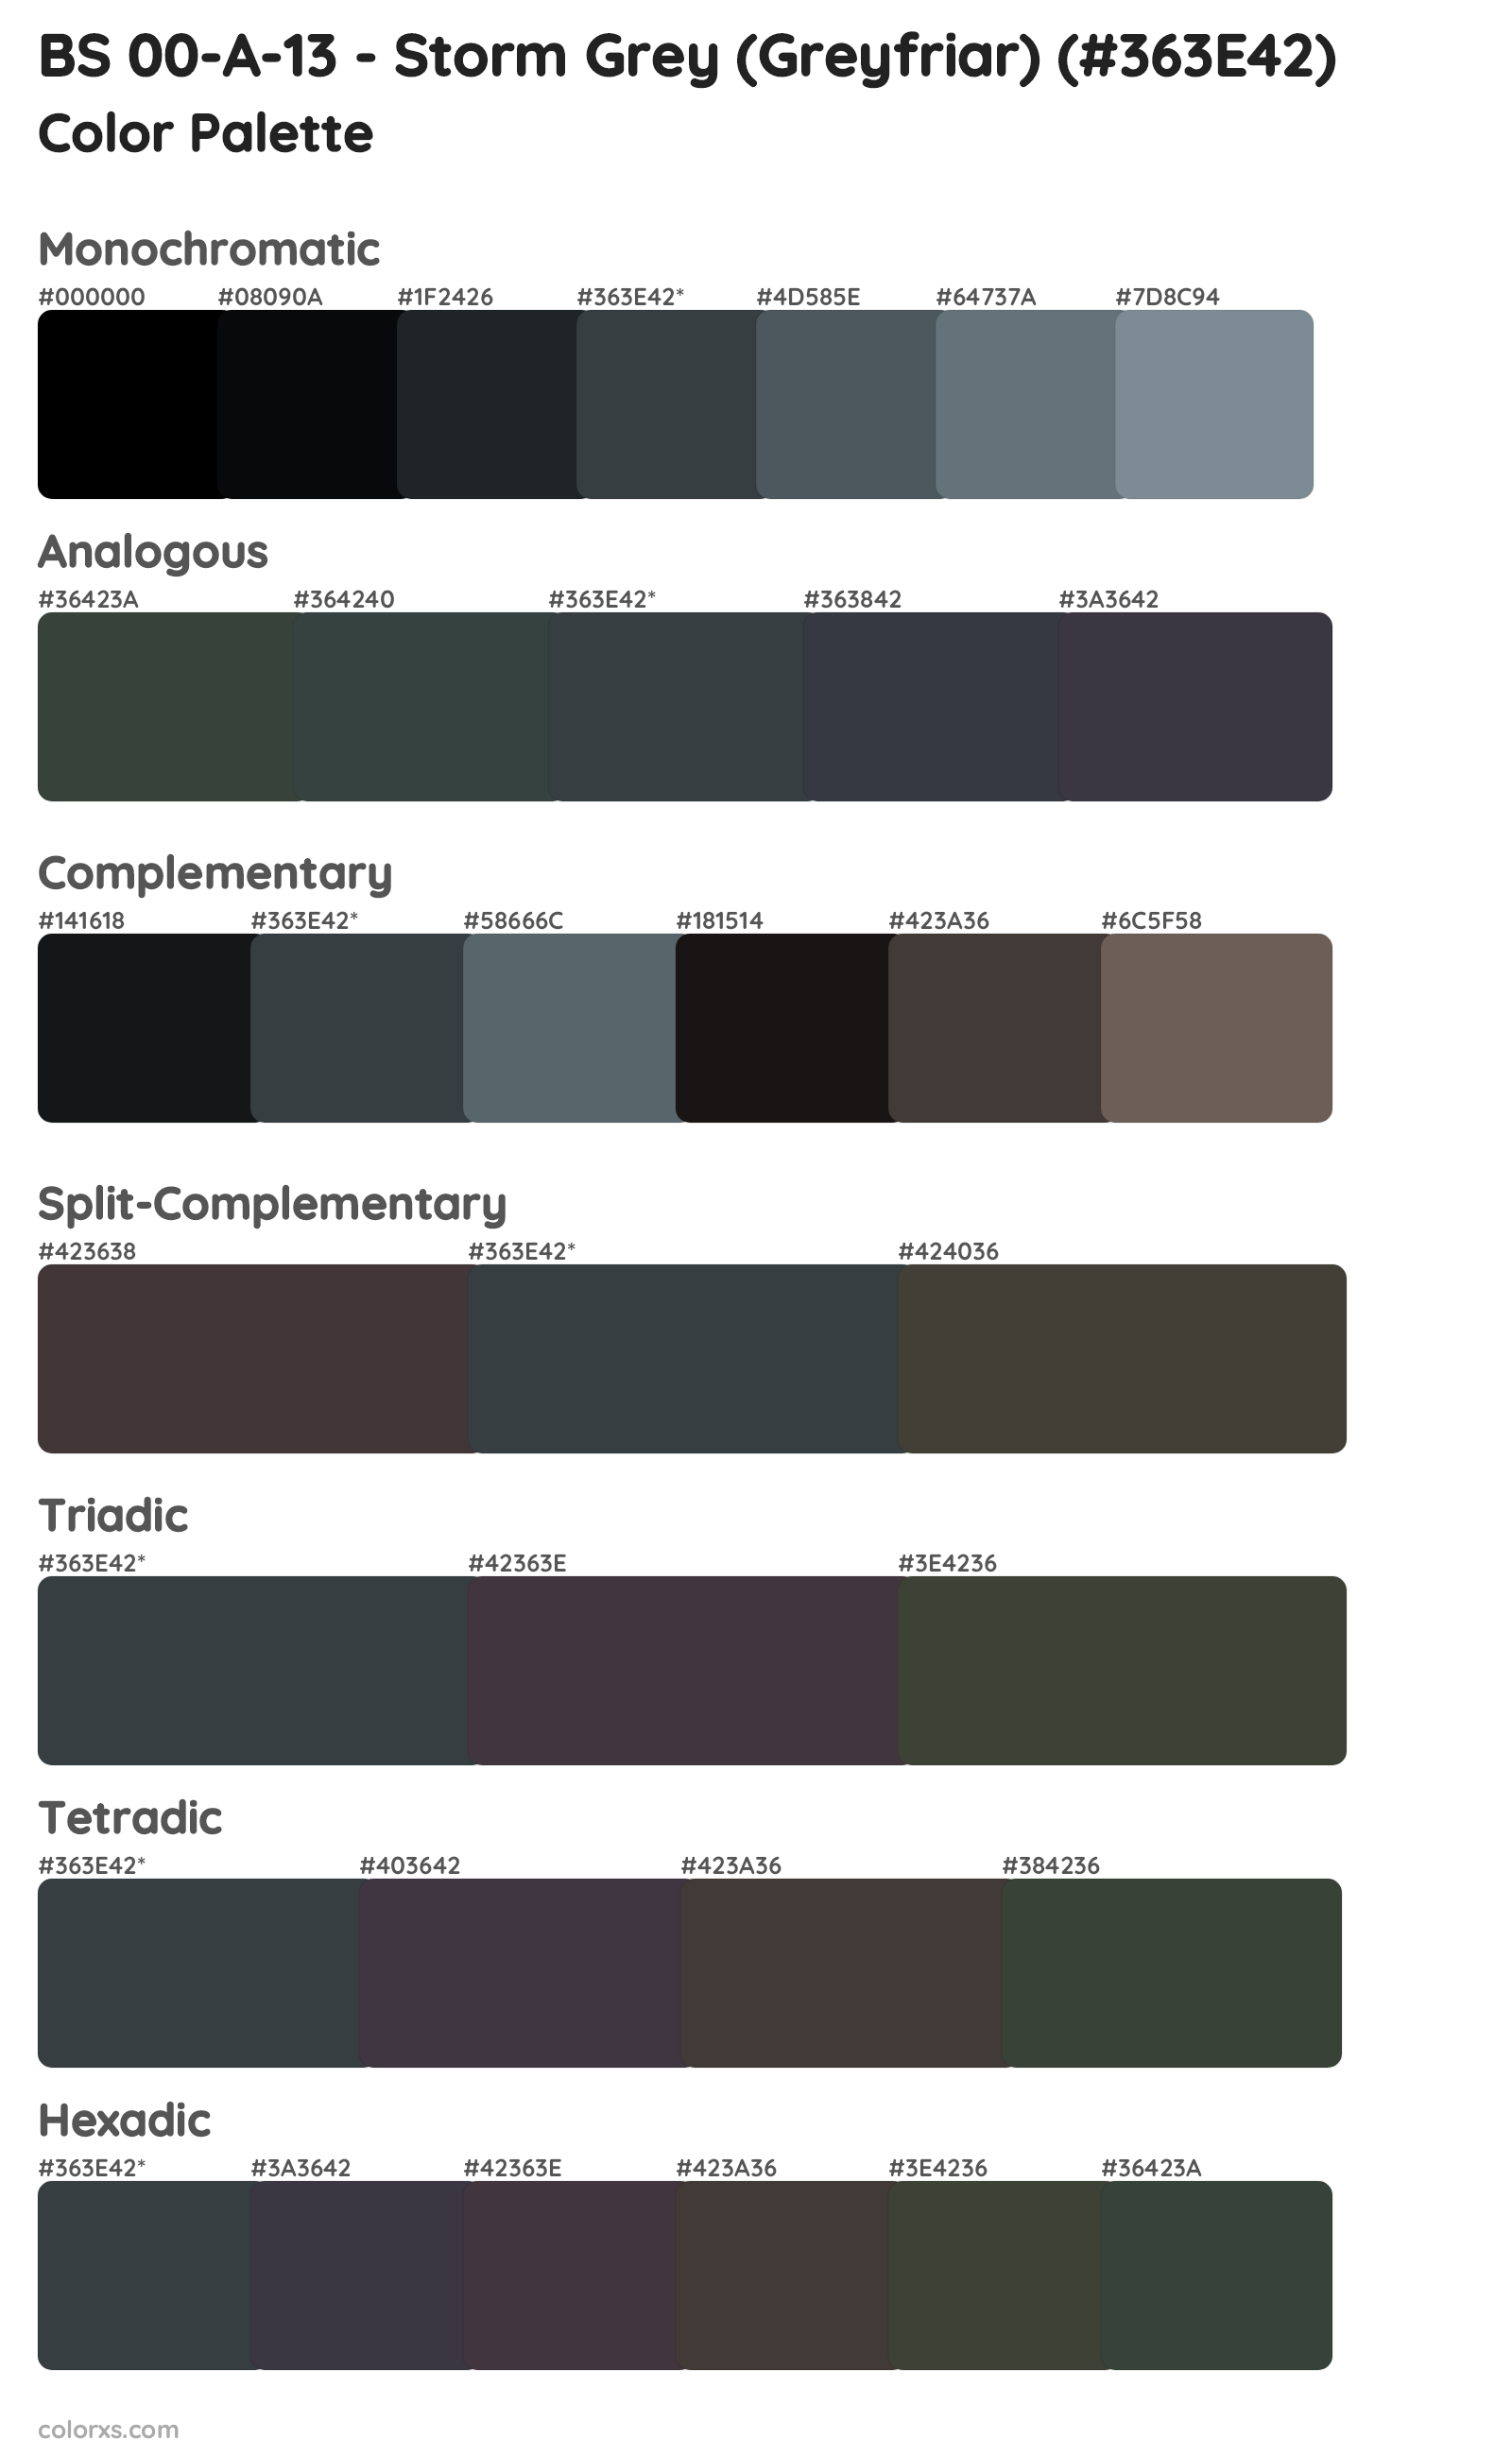 BS 00-A-13 - Storm Grey (Greyfriar) Color Scheme Palettes